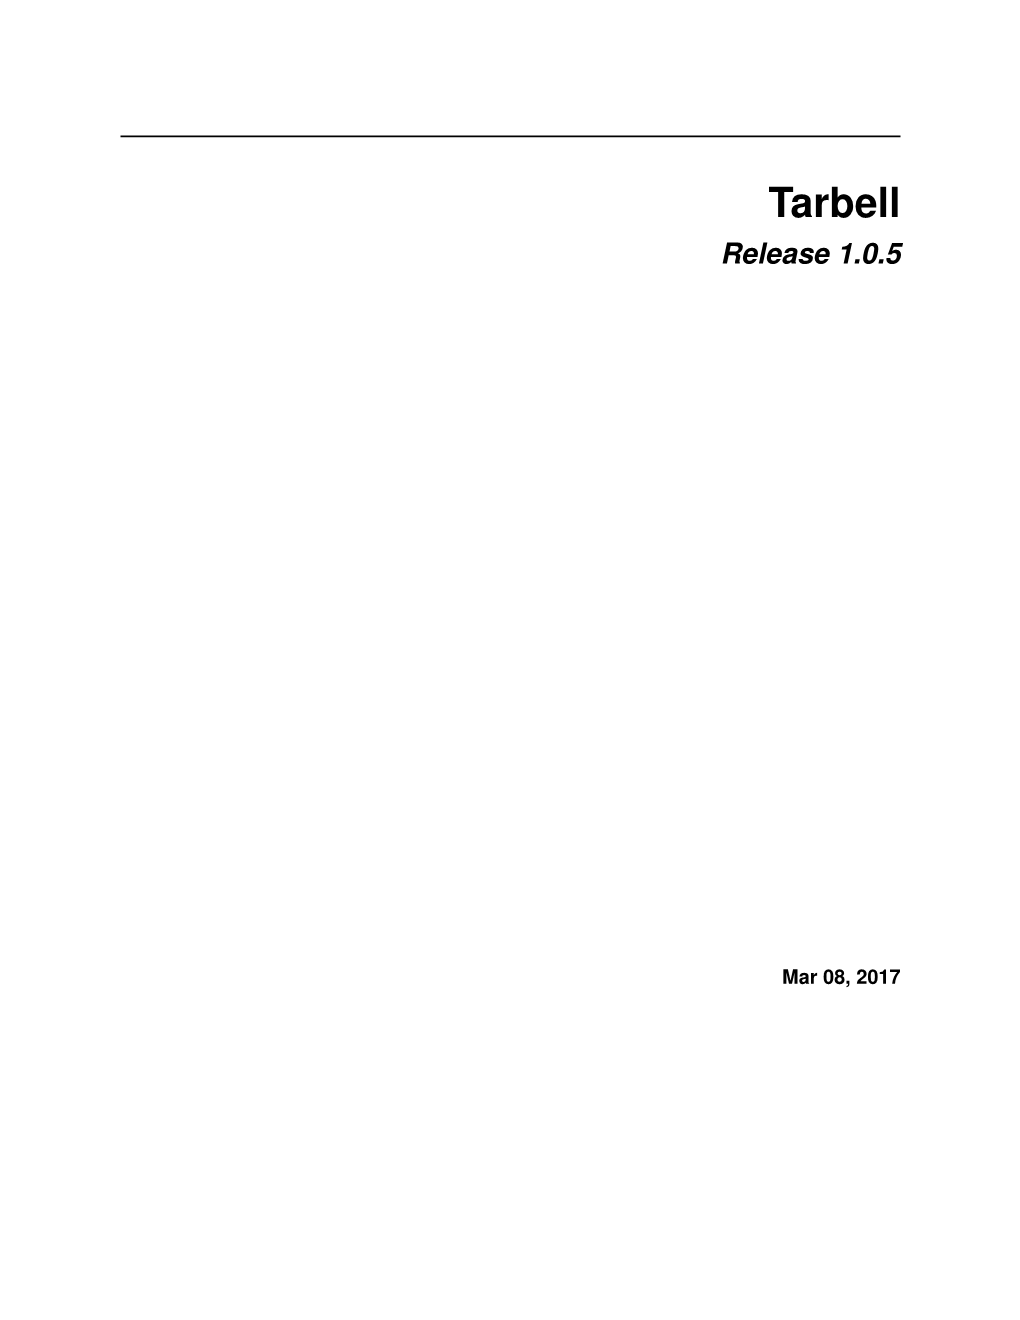 Tarbell Release 1.0.5